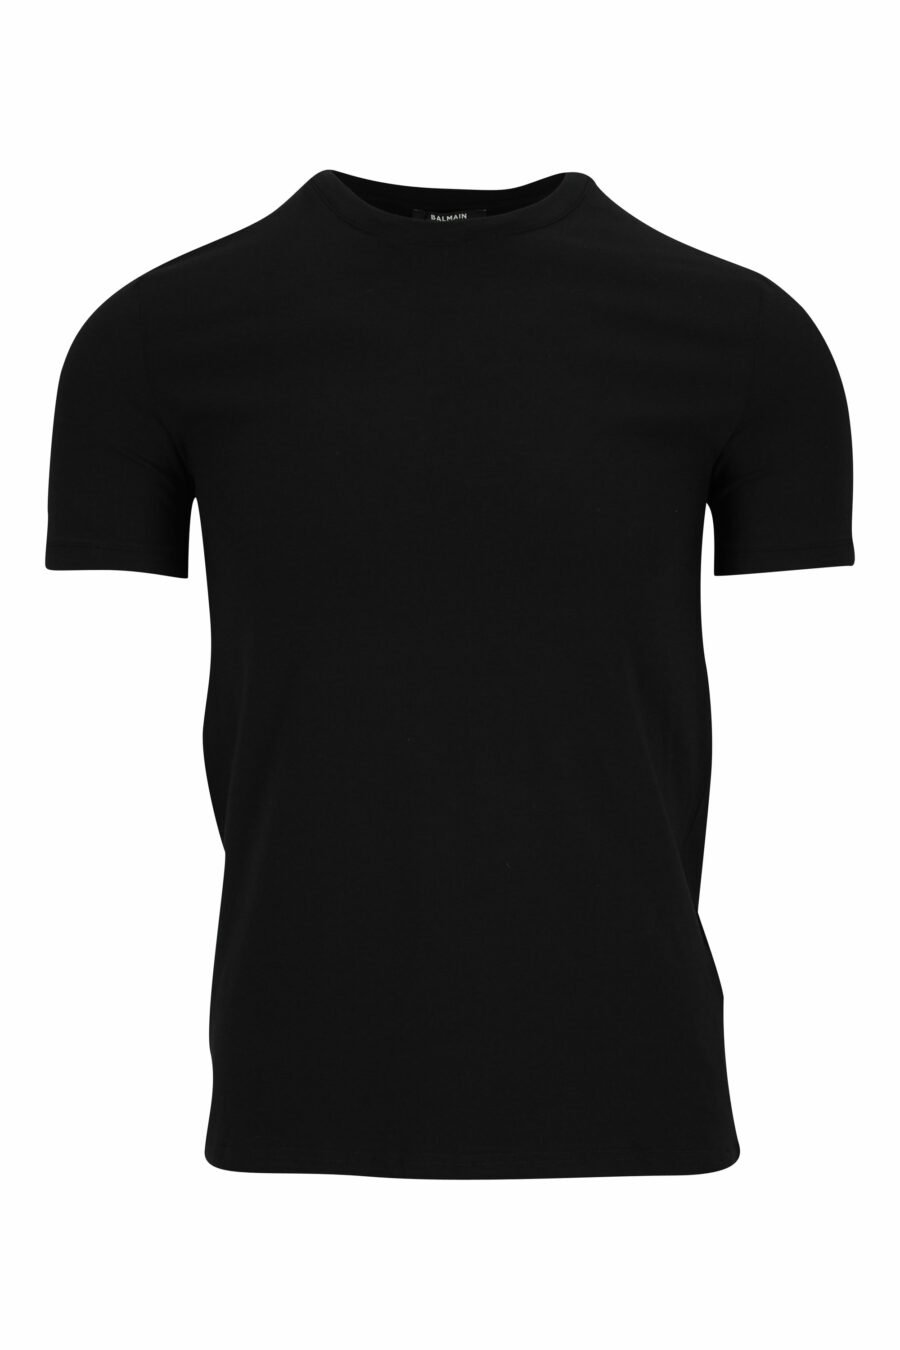 Camiseta negra con minilogo en cuello - 8032674524621